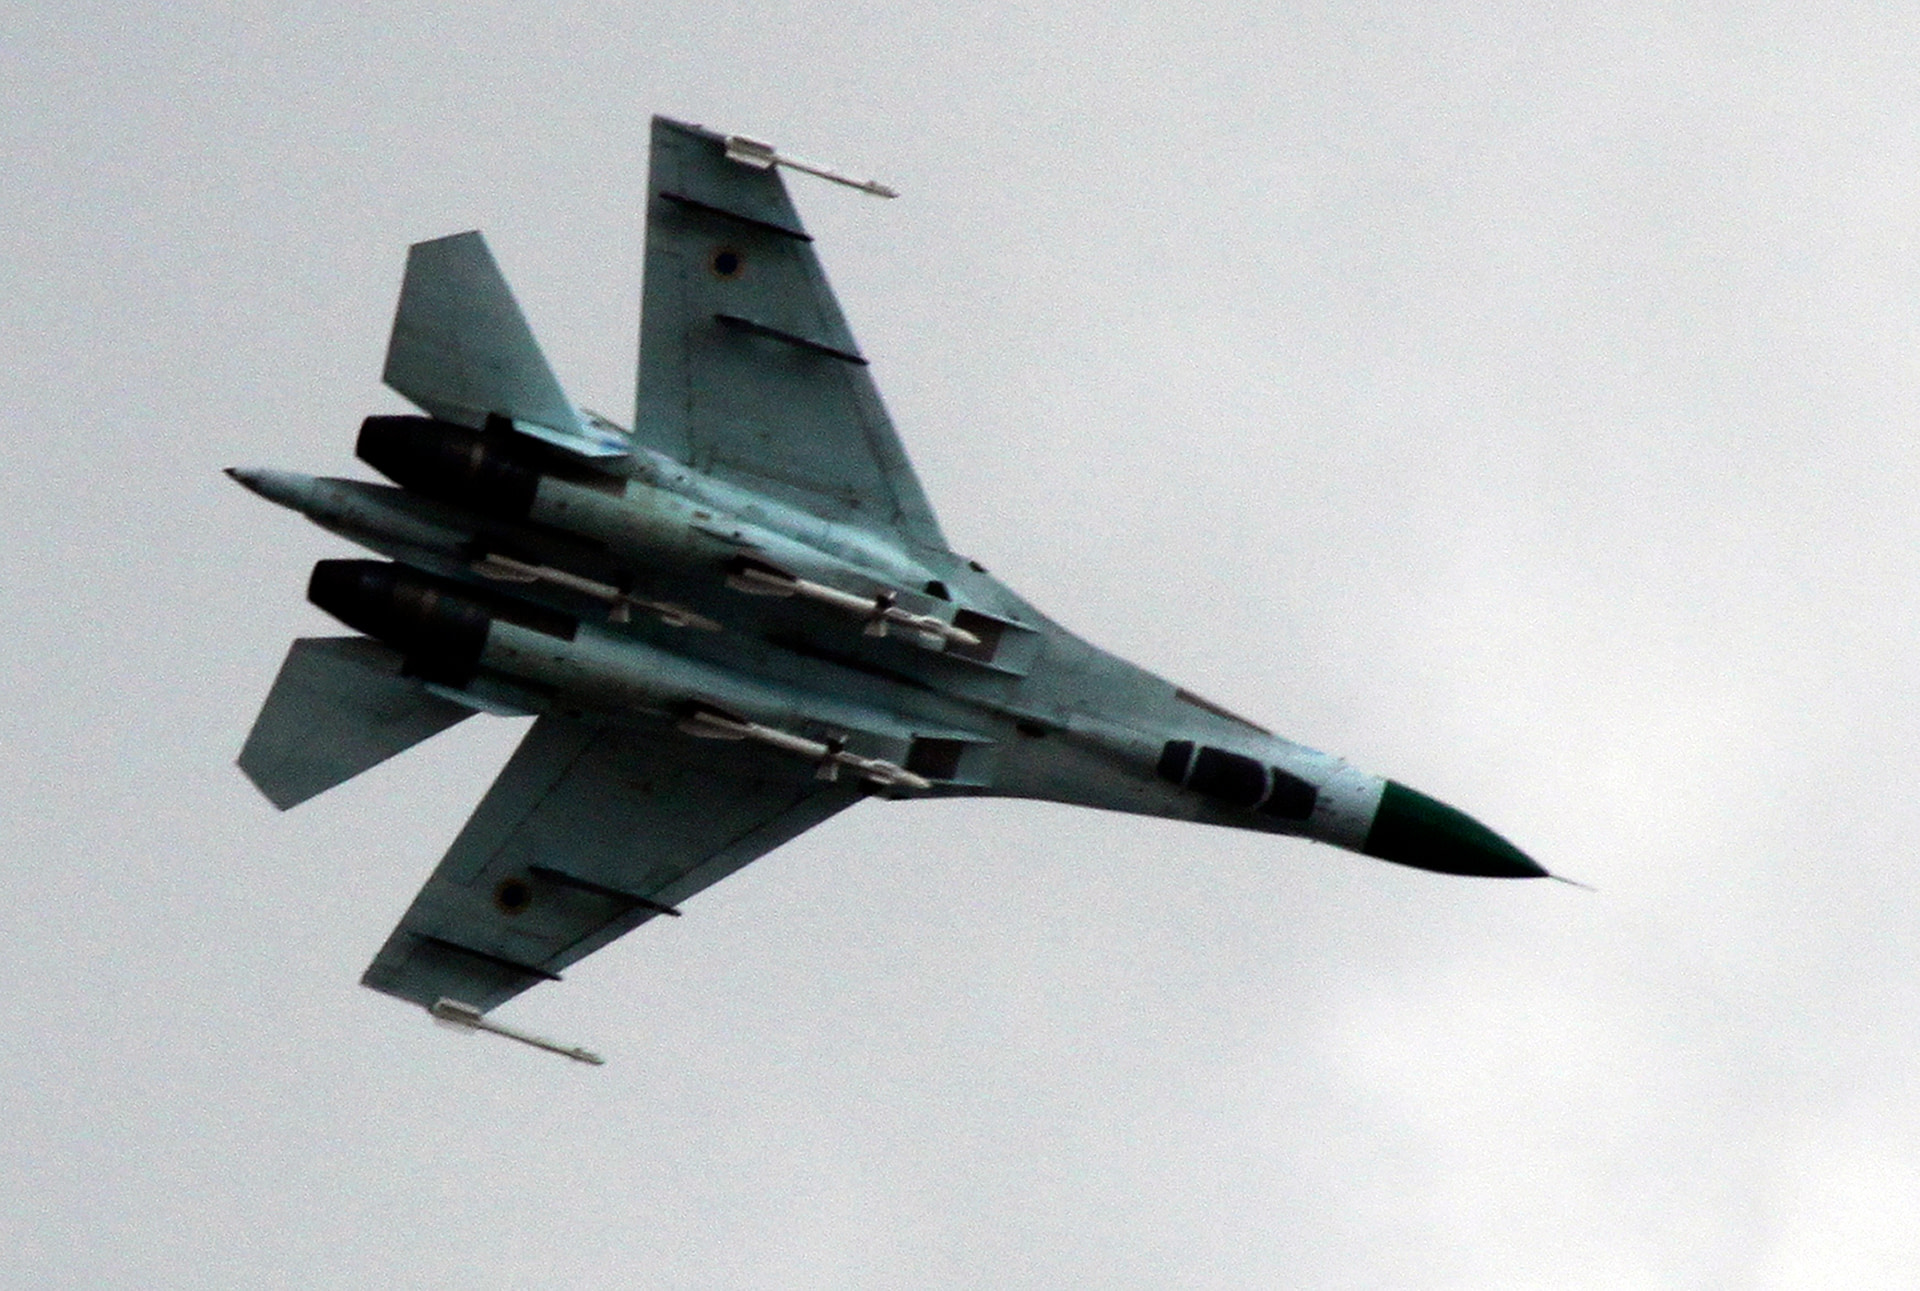 2 Ukrainian pilots are in U.S. to determine fighter jet skills